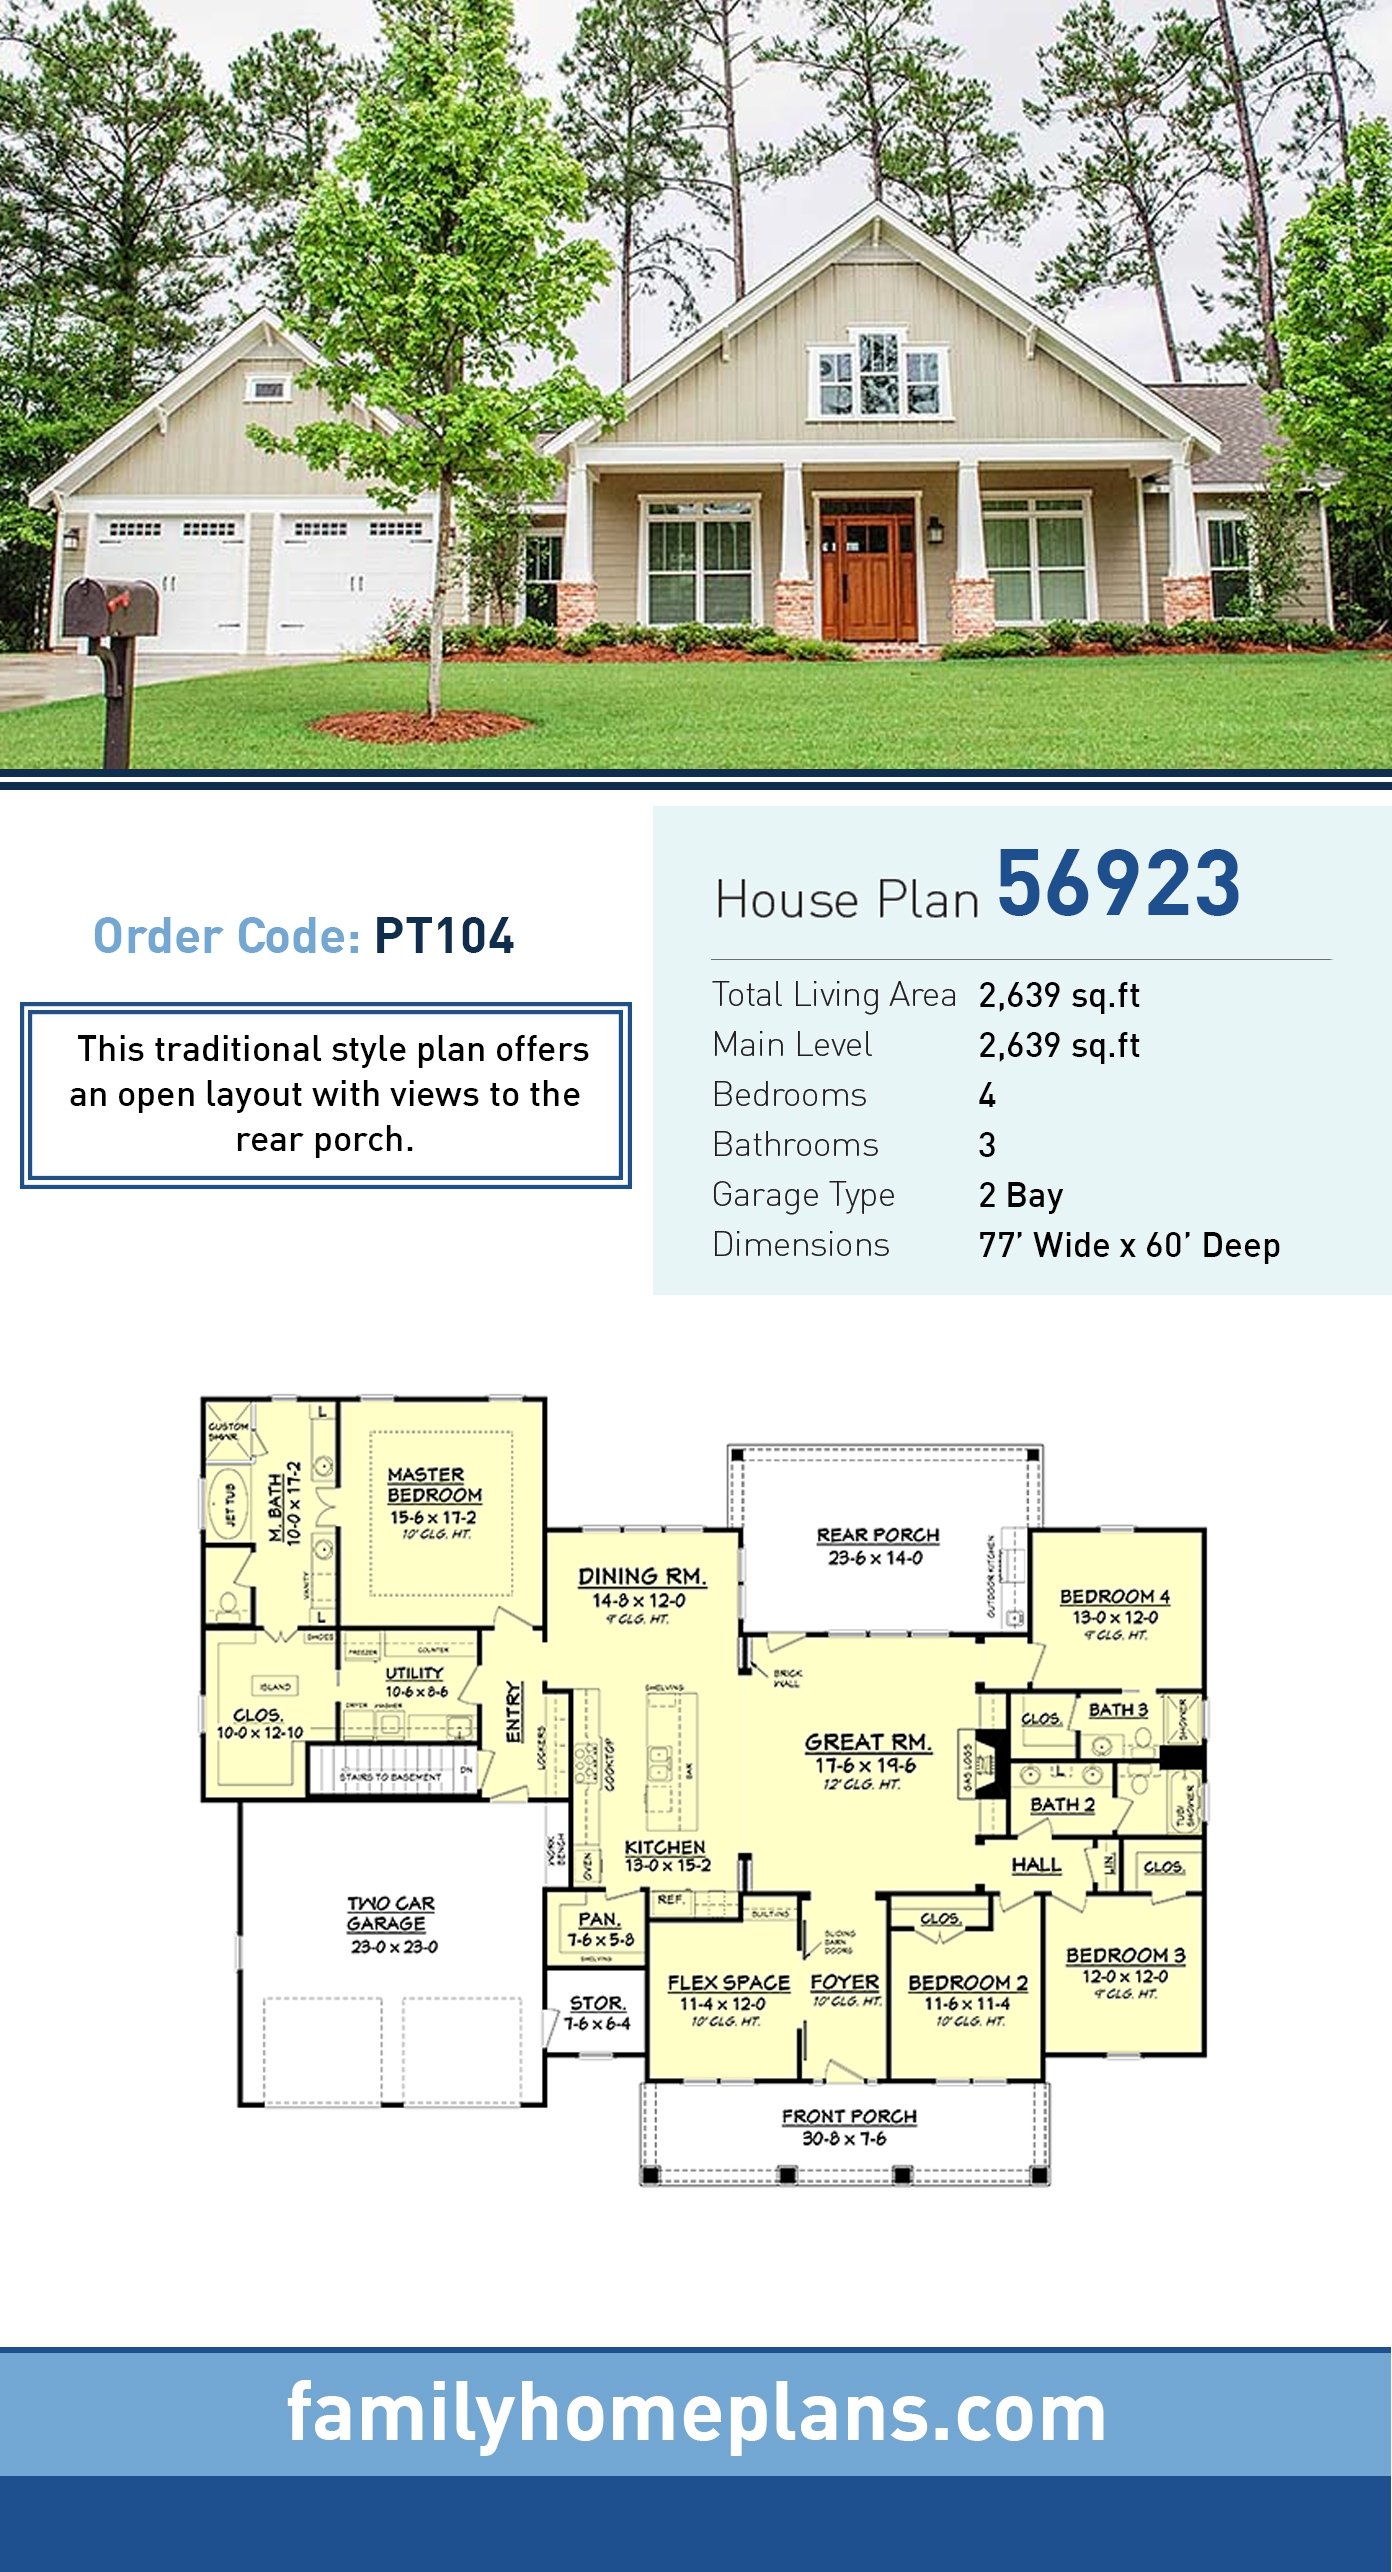 House Plan 56923